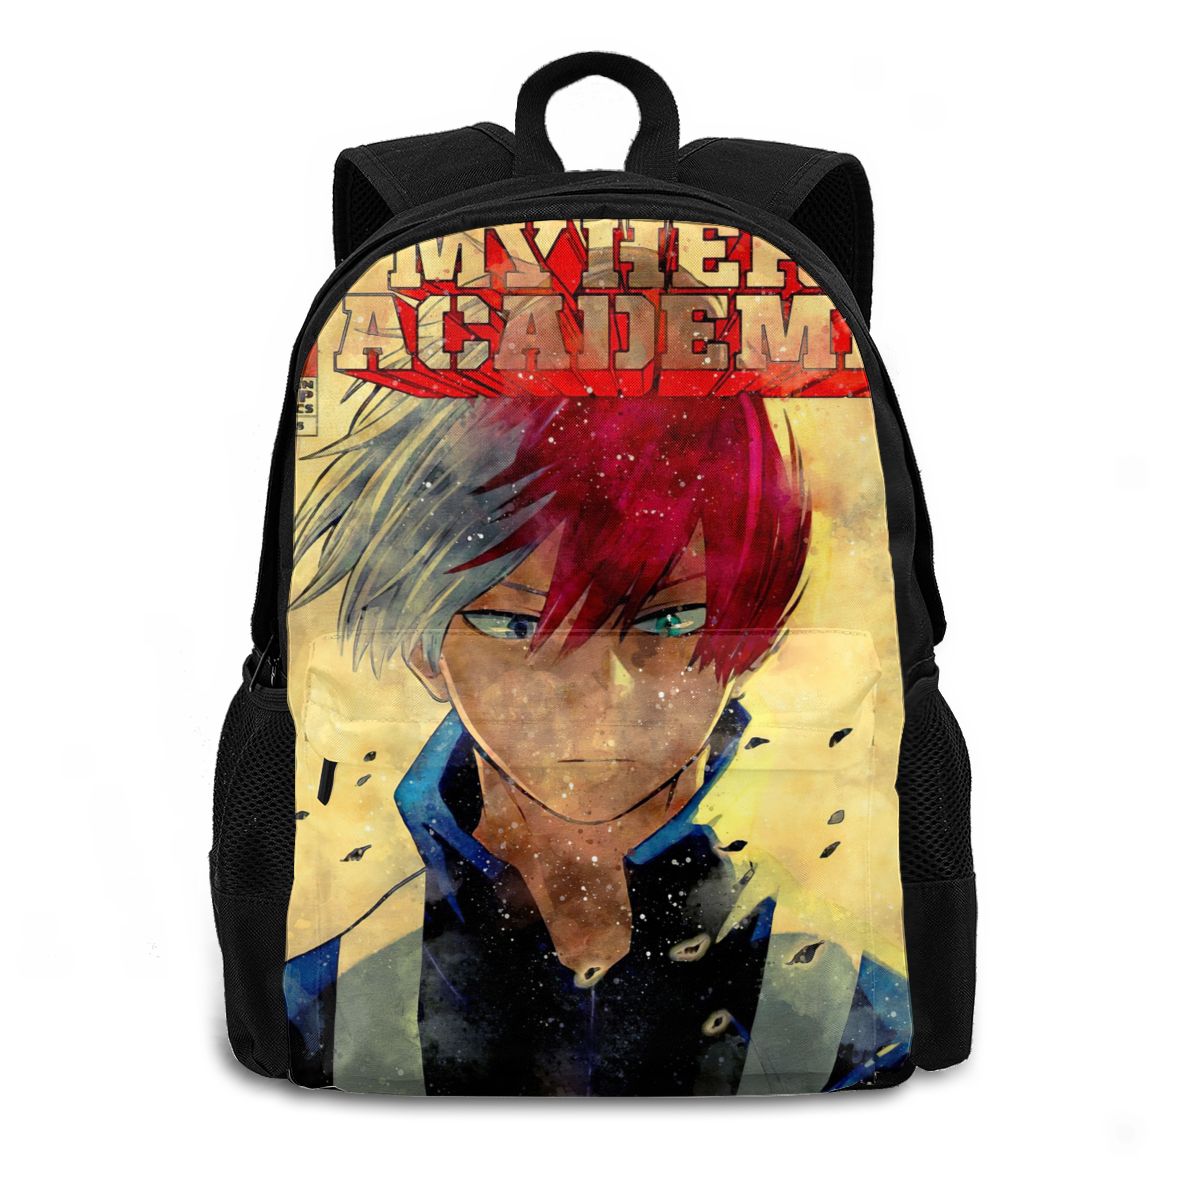 Anime hero backpack